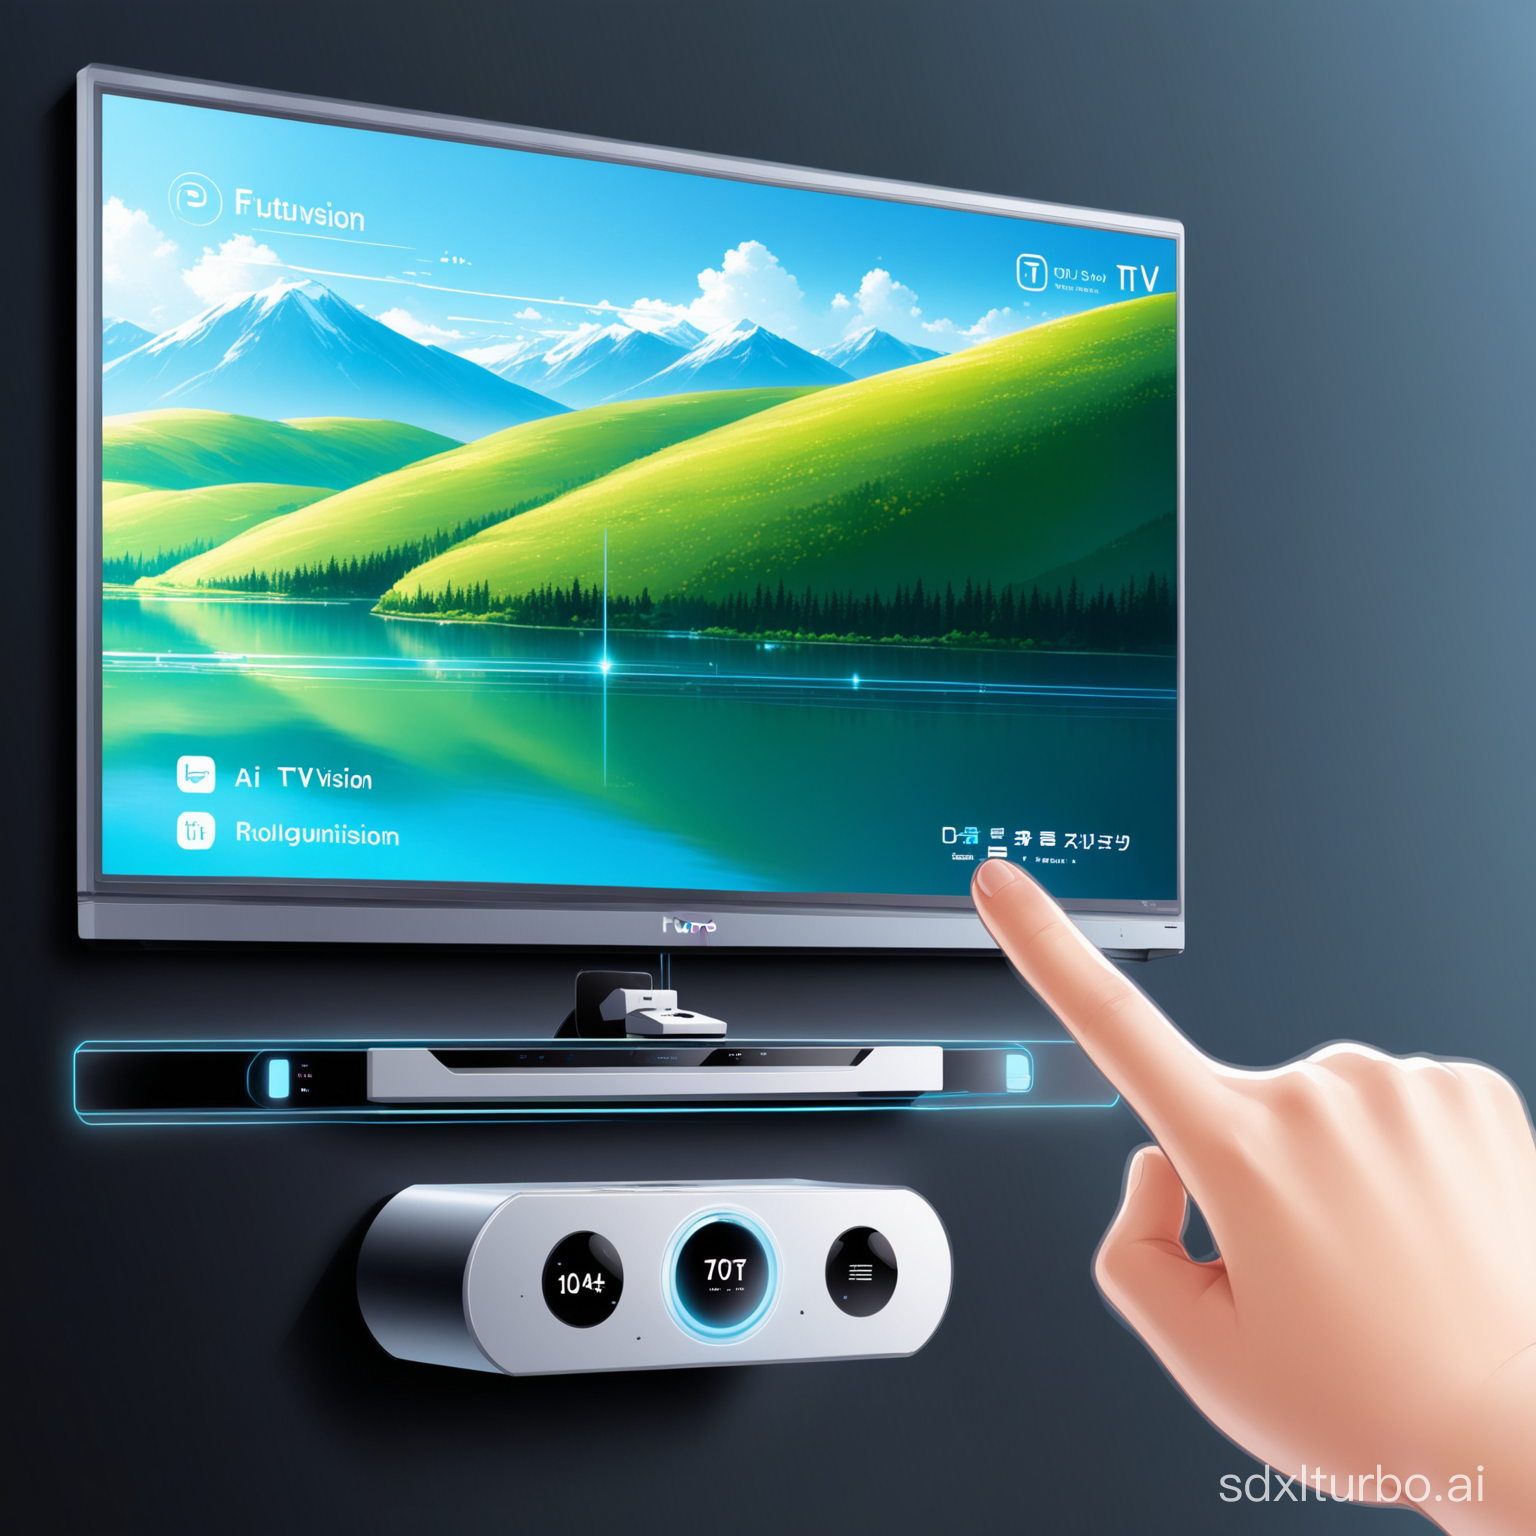 名称：FutureVision TV 外观设计： FutureVision TV采用简约、现代的外观设计，整体造型流线型，以银色或黑色为主色调，给人一种未来科技感。设备体积相对较小，便于放置和携带。 全息显示技术： FutureVision TV采用全息技术，能够在空中呈现逼真的图像和视频。用户可以直接在空中观看电影、播放游戏或浏览网页，无需屏幕，带来更加沉浸式的观影体验。 隔空交互功能： FutureVision TV具备隔空交互功能，用户可以通过手势控制来操作电视。使用者可以用手指滑动和捏合手势进行菜单选择、音量调节等操作，实现一个直观、自然的用户界面。 语音识别与控制： FutureVision TV内置强大的语音识别技术，用户可以通过语音指令来控制电视。无需遥控器，只需用语音命令即可实现切换频道、搜索内容、调整音量等操作。 智能AI助手： FutureVision TV搭载智能AI助手，能够理解用户需求并提供个性化推荐。智能AI助手能够学习用户的喜好和习惯，根据用户的观看历史和兴趣推荐适合的电影、电视剧和其他内容。